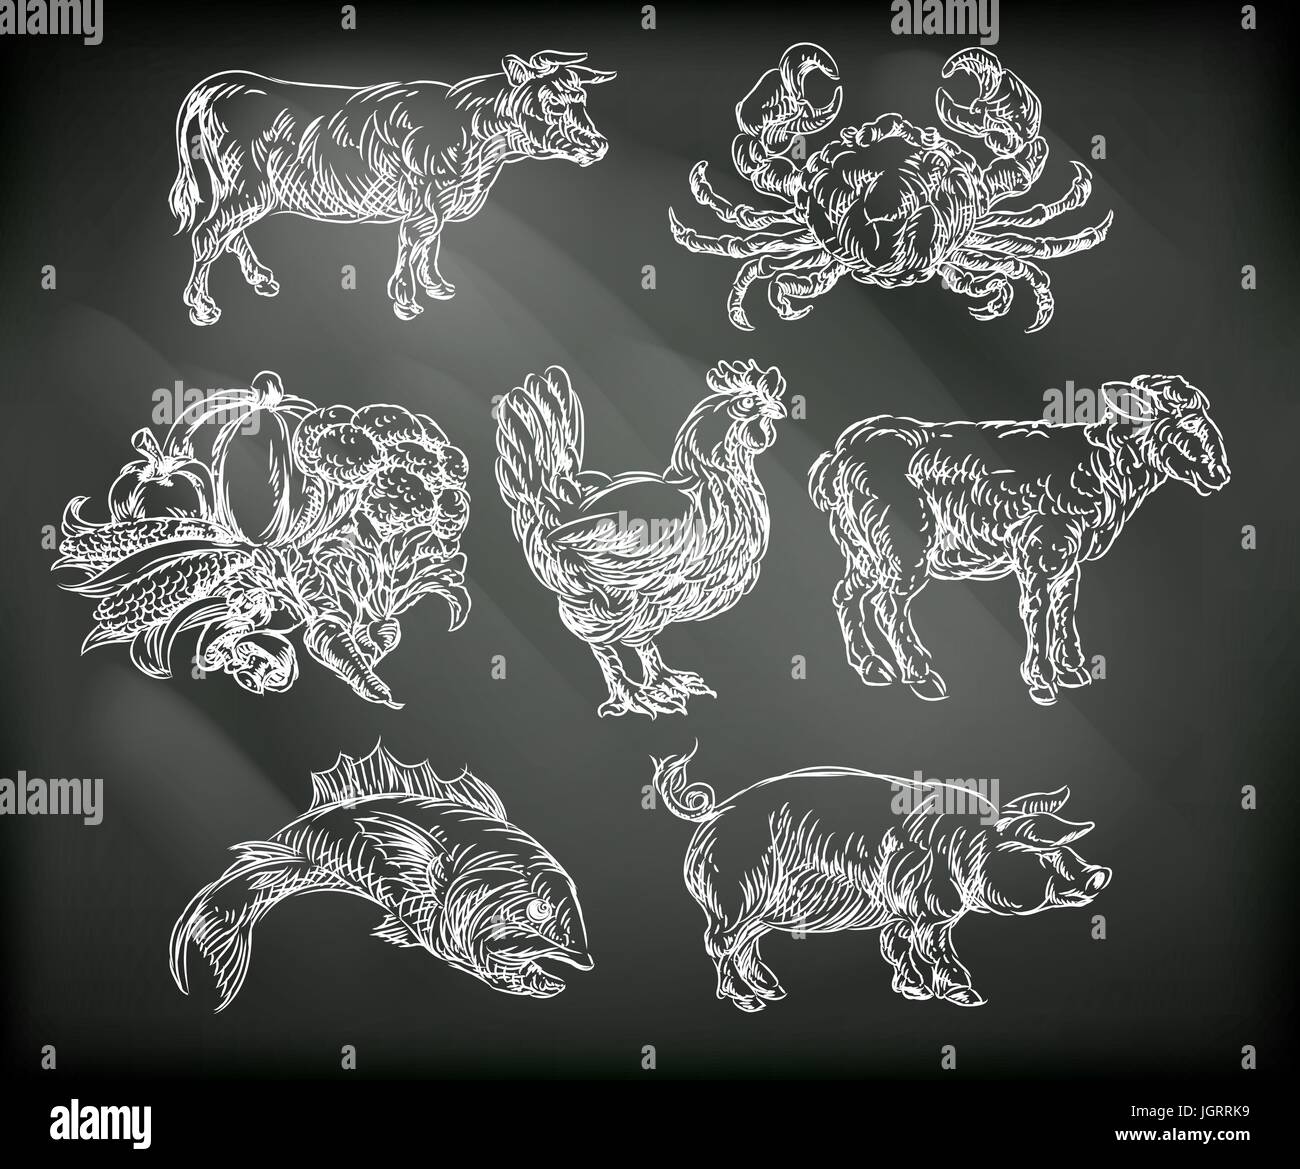 Food Groups Chalk Hand Drawn Animal Icons Stock Vector